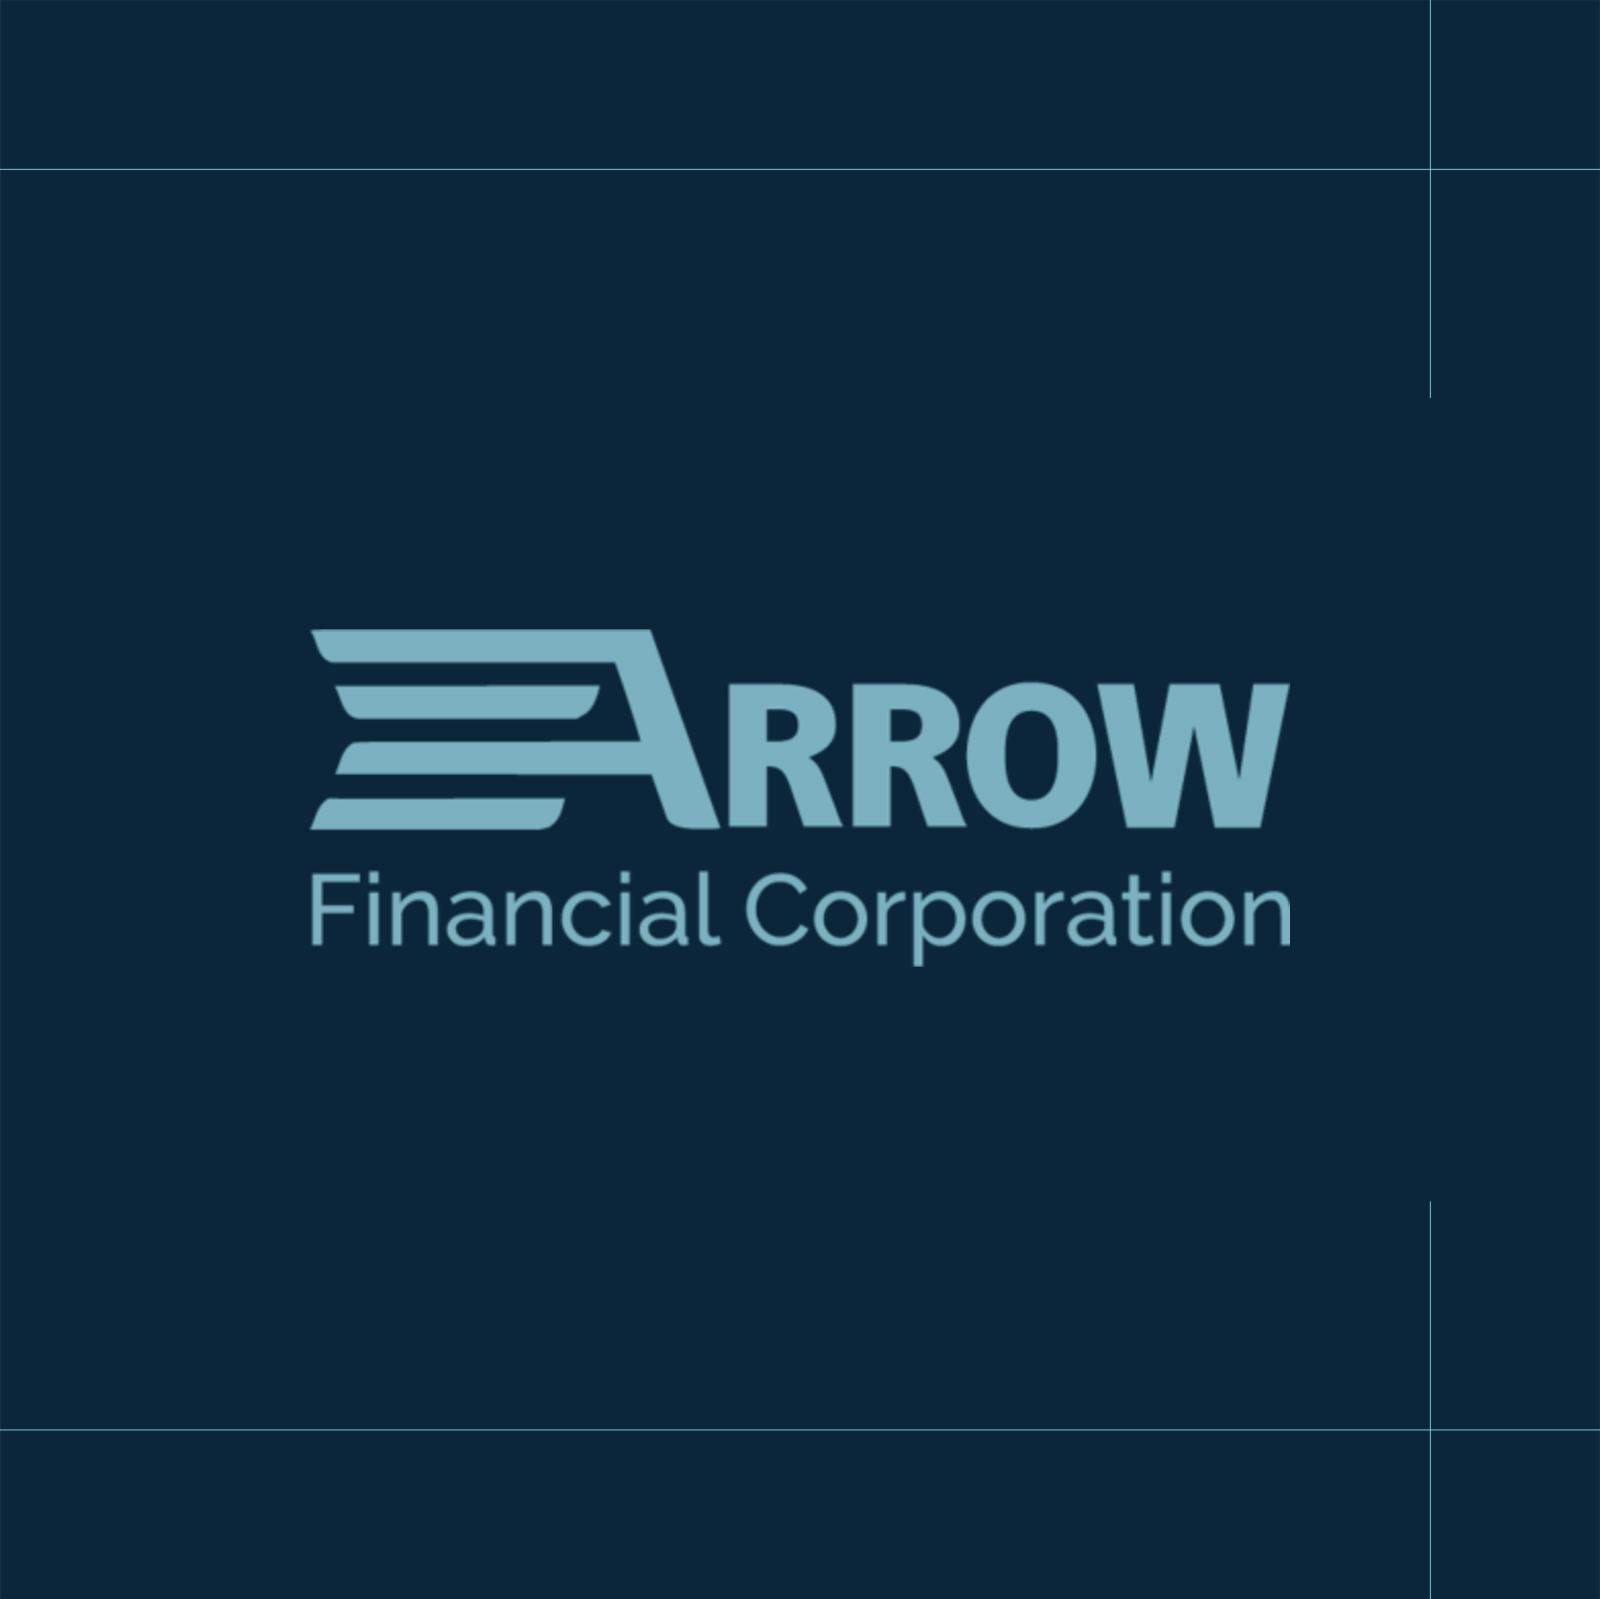 Arrow-Financial-Corporation